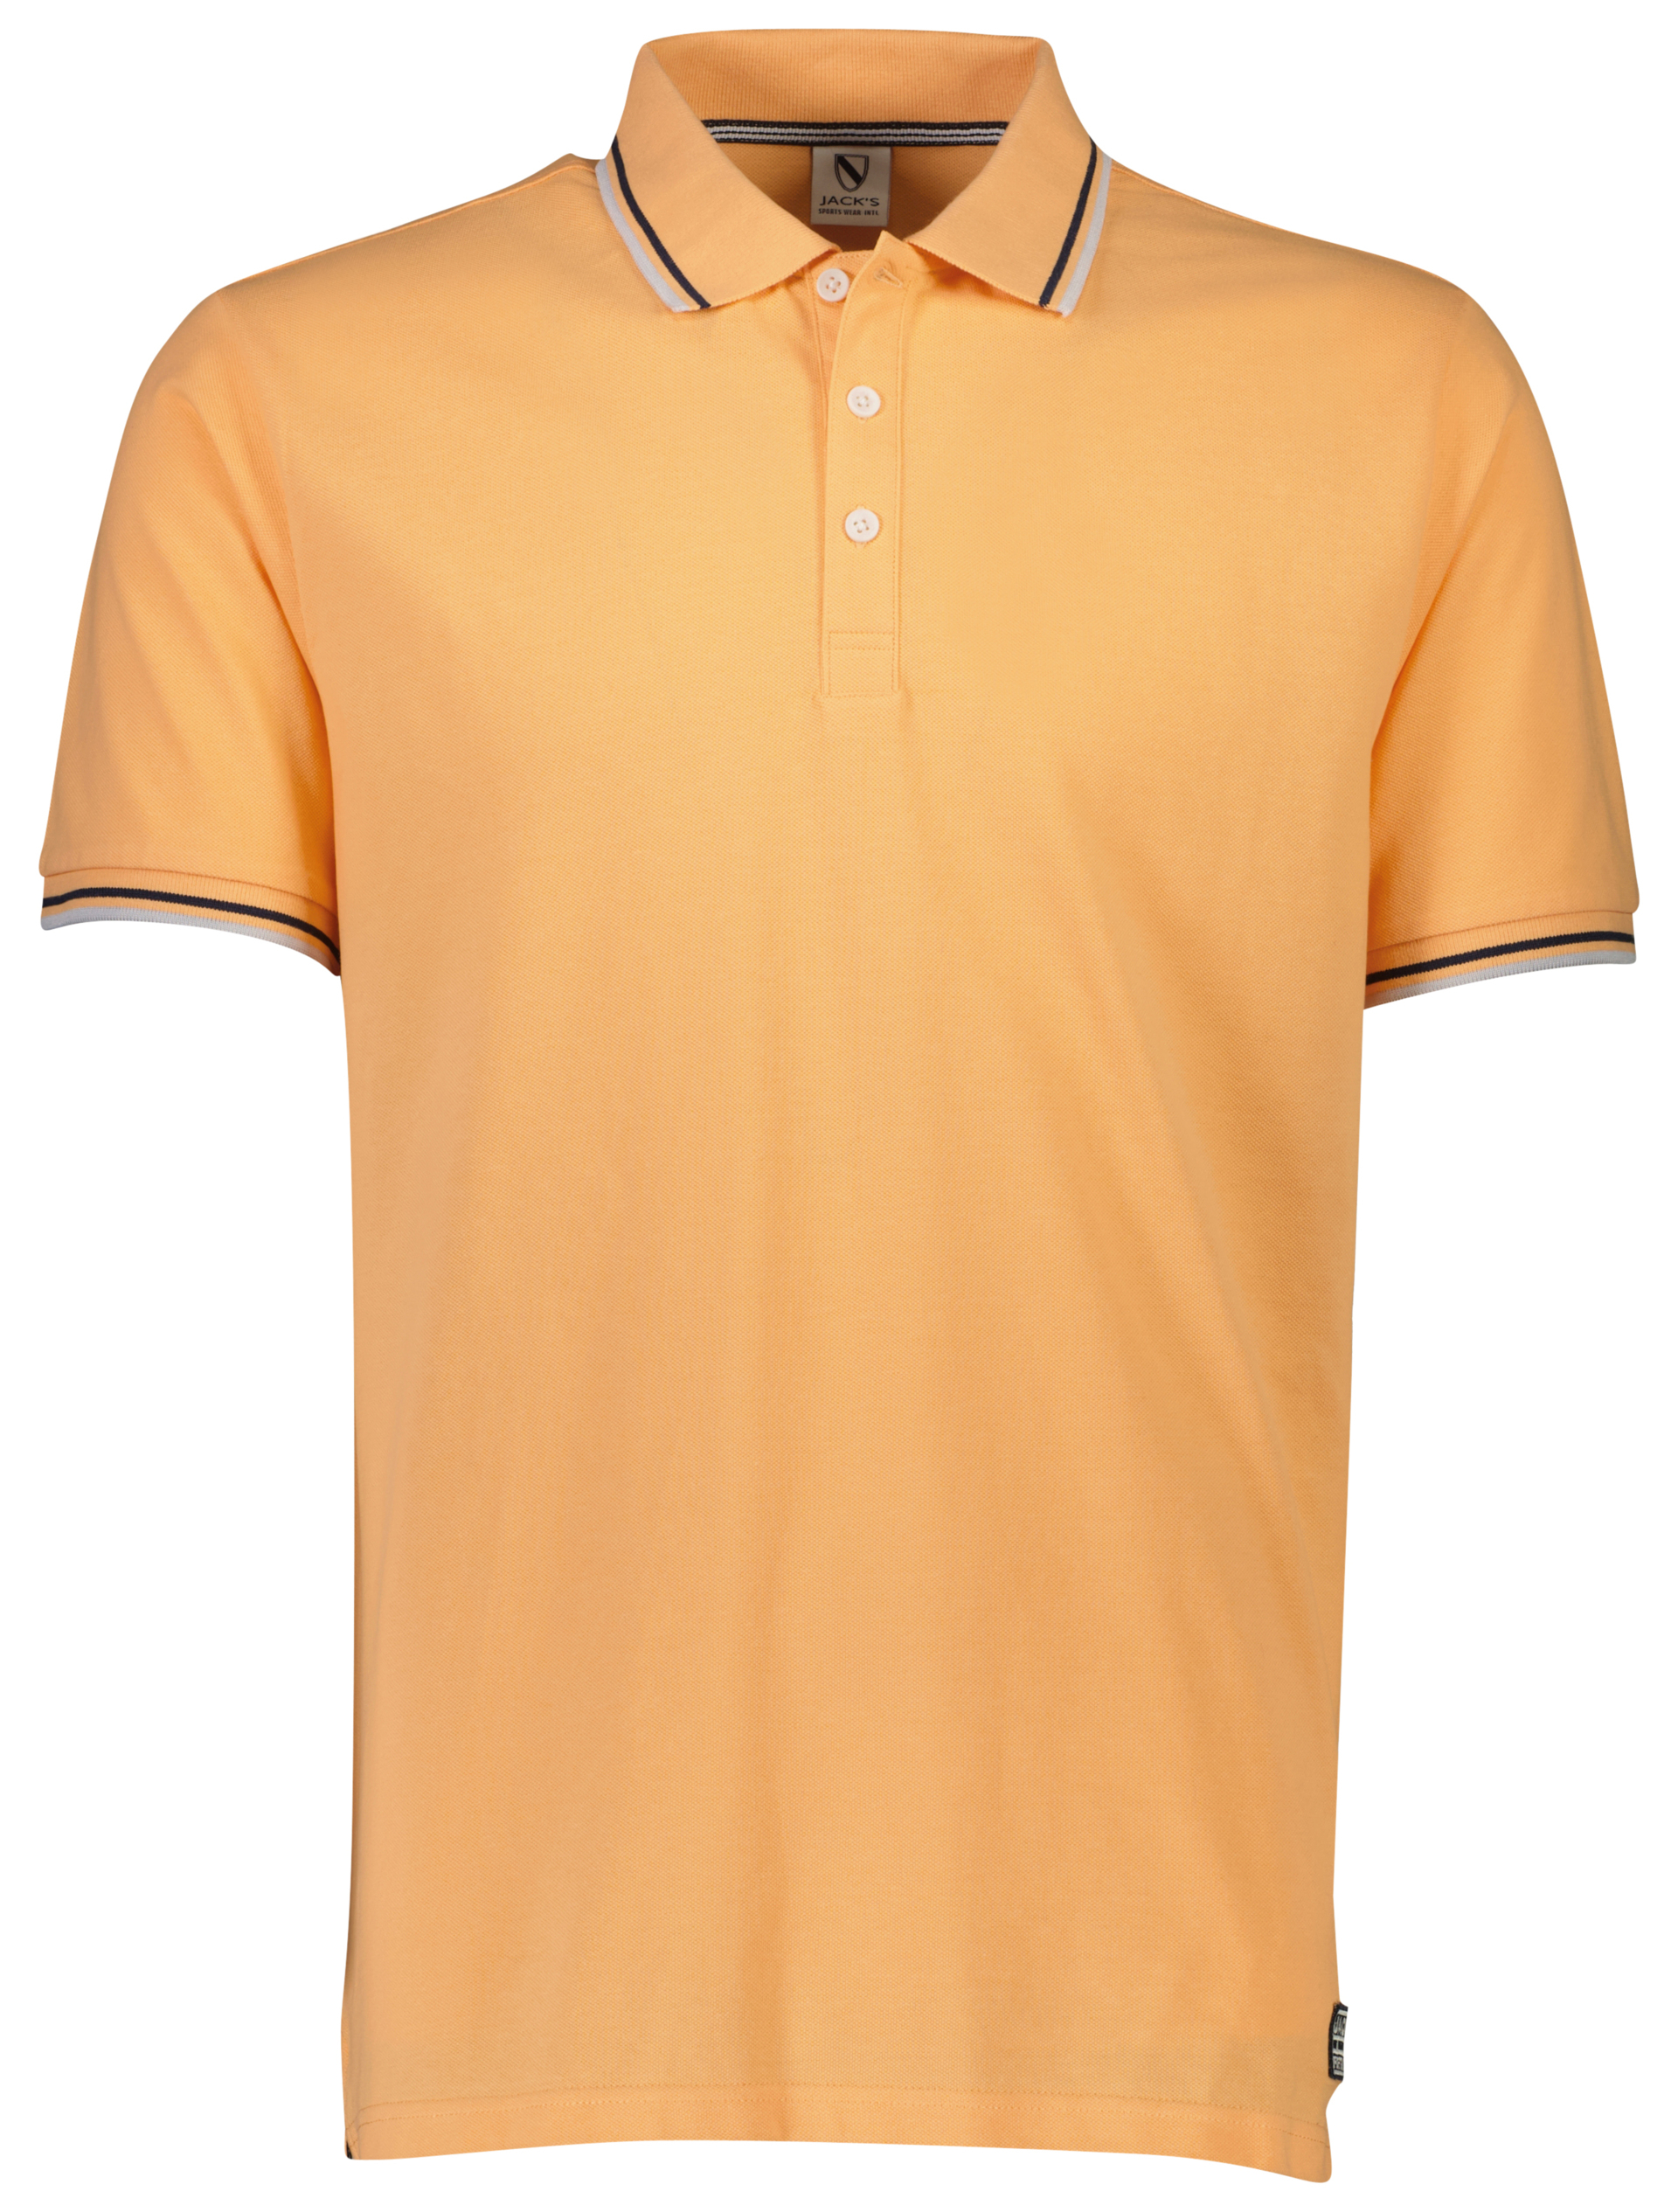 Jack's Poloshirt orange / coral